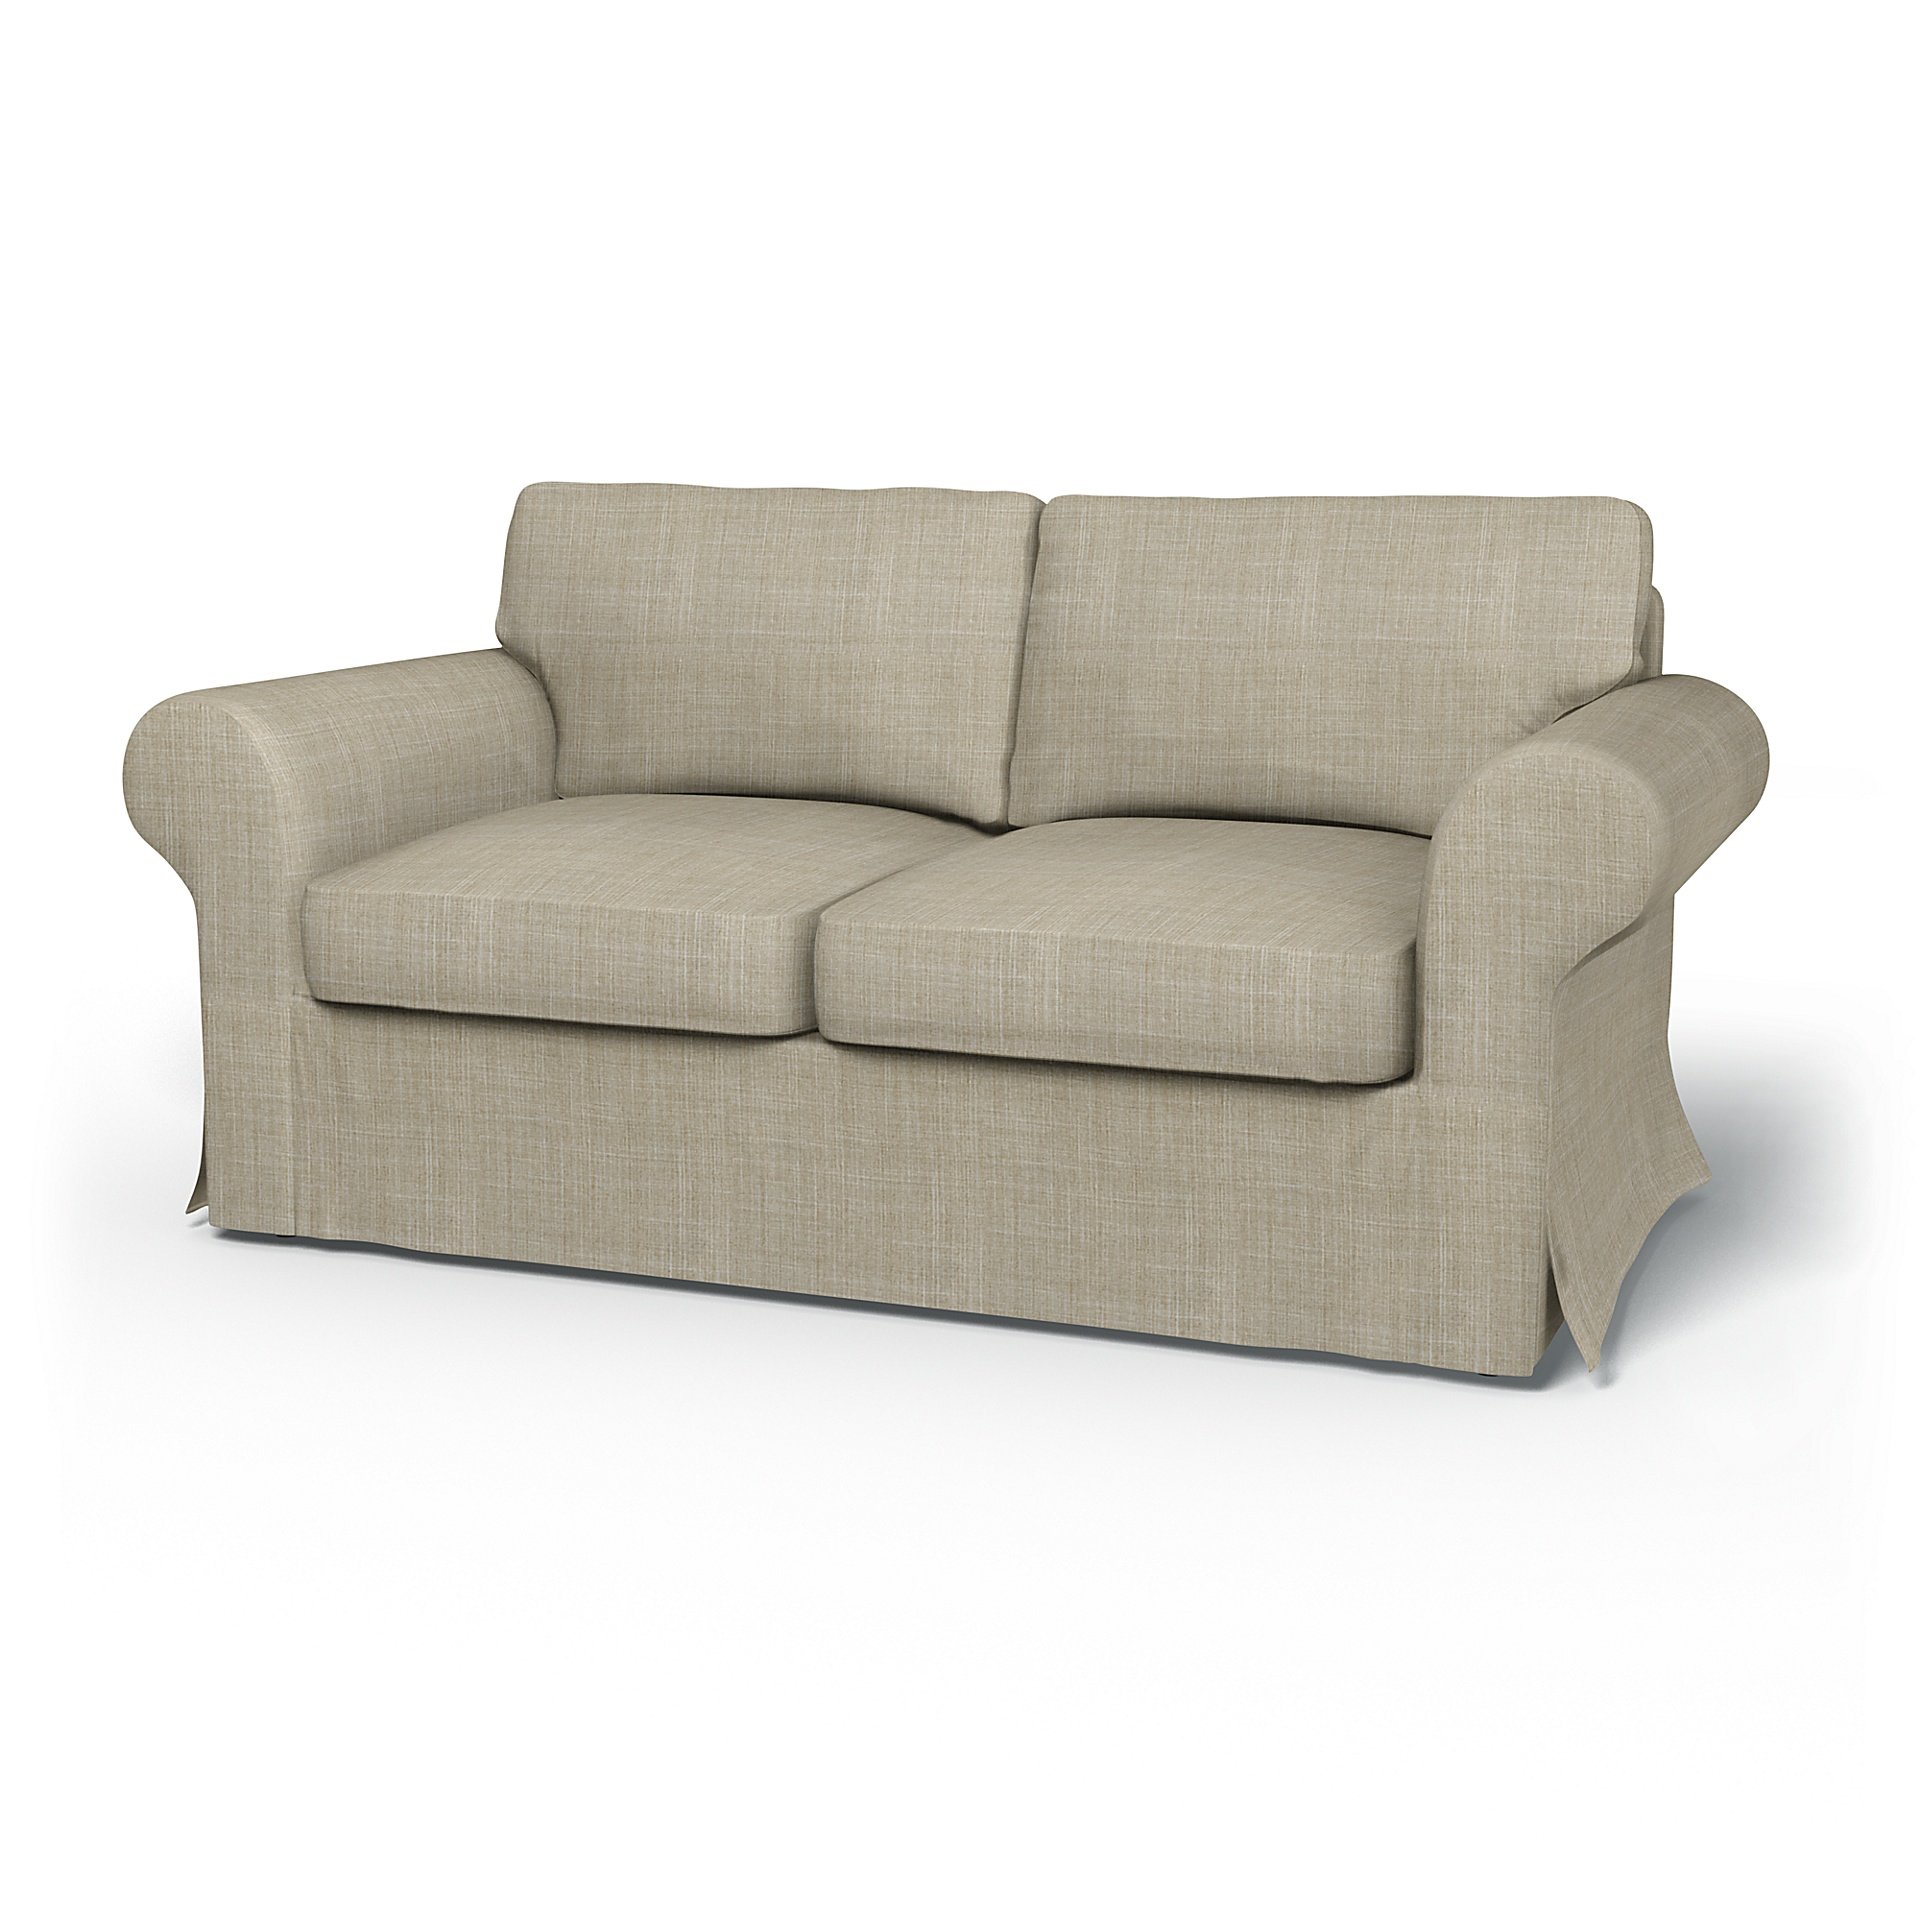 IKEA - Ektorp 2 Seater Sofa Bed Cover, Sand Beige, Boucle & Texture - Bemz